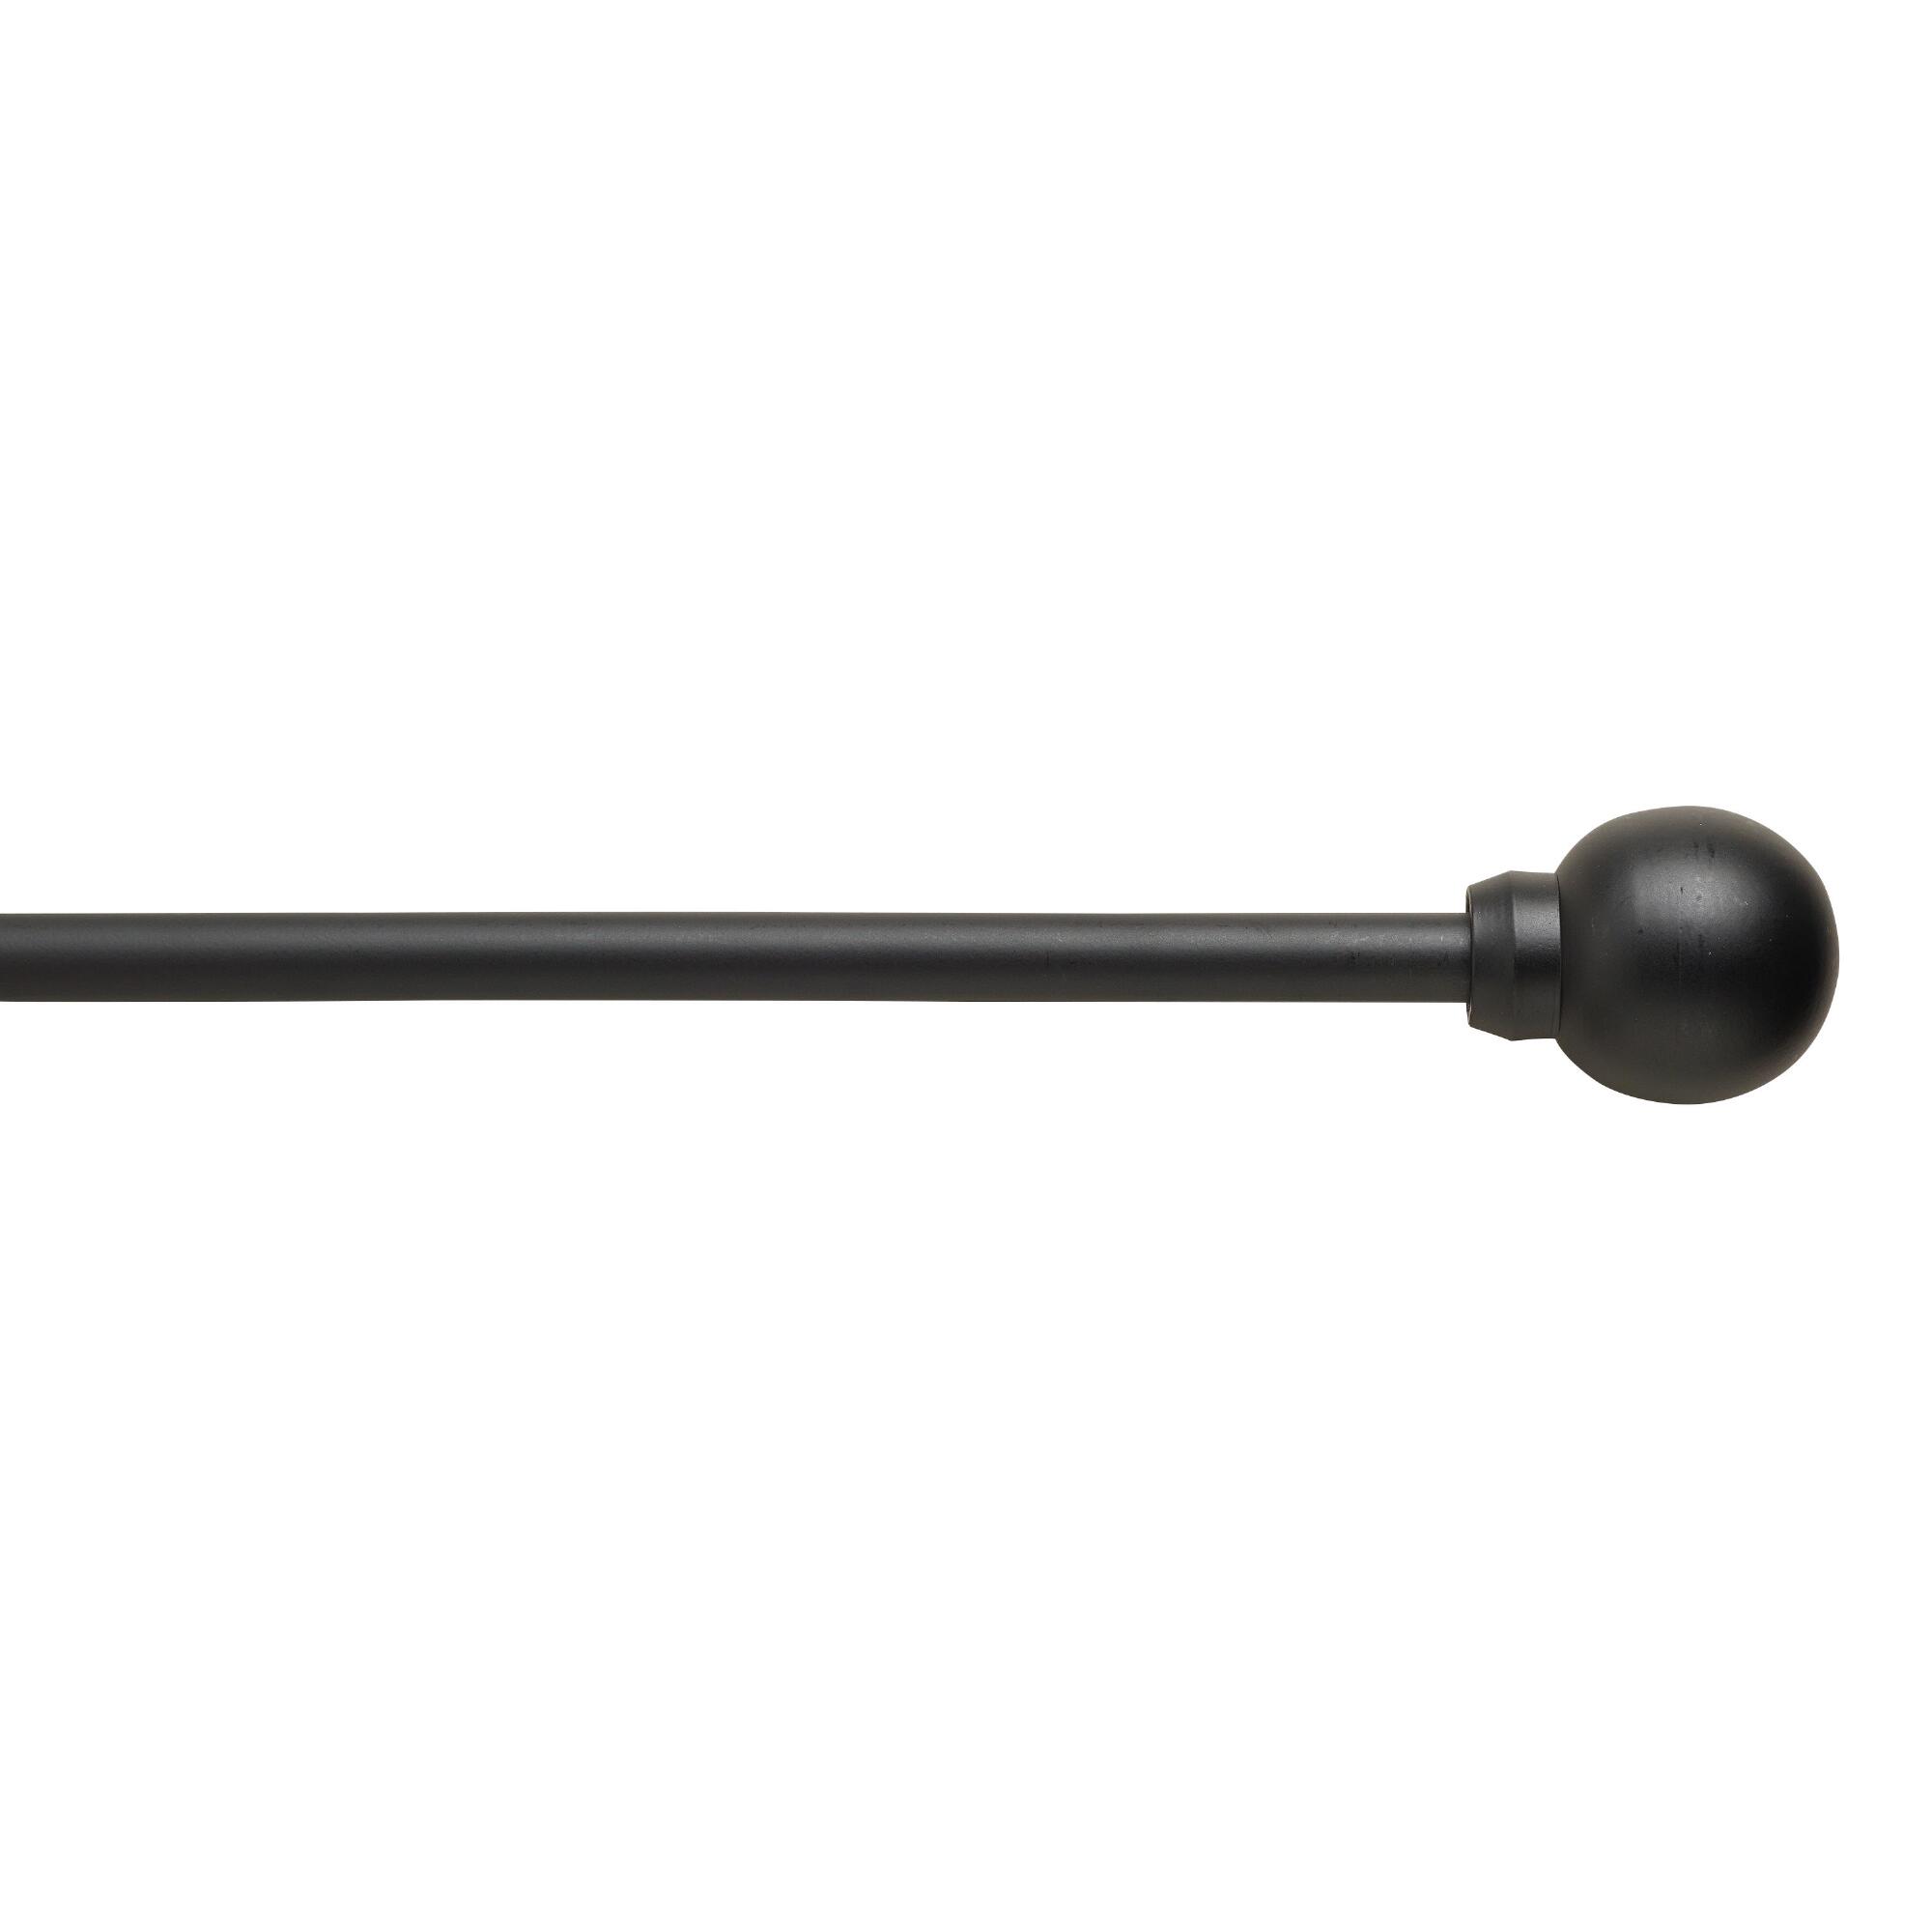 Matte Ball Drapery Rods: Black - Metal - 48" to 88" Rod by World Market